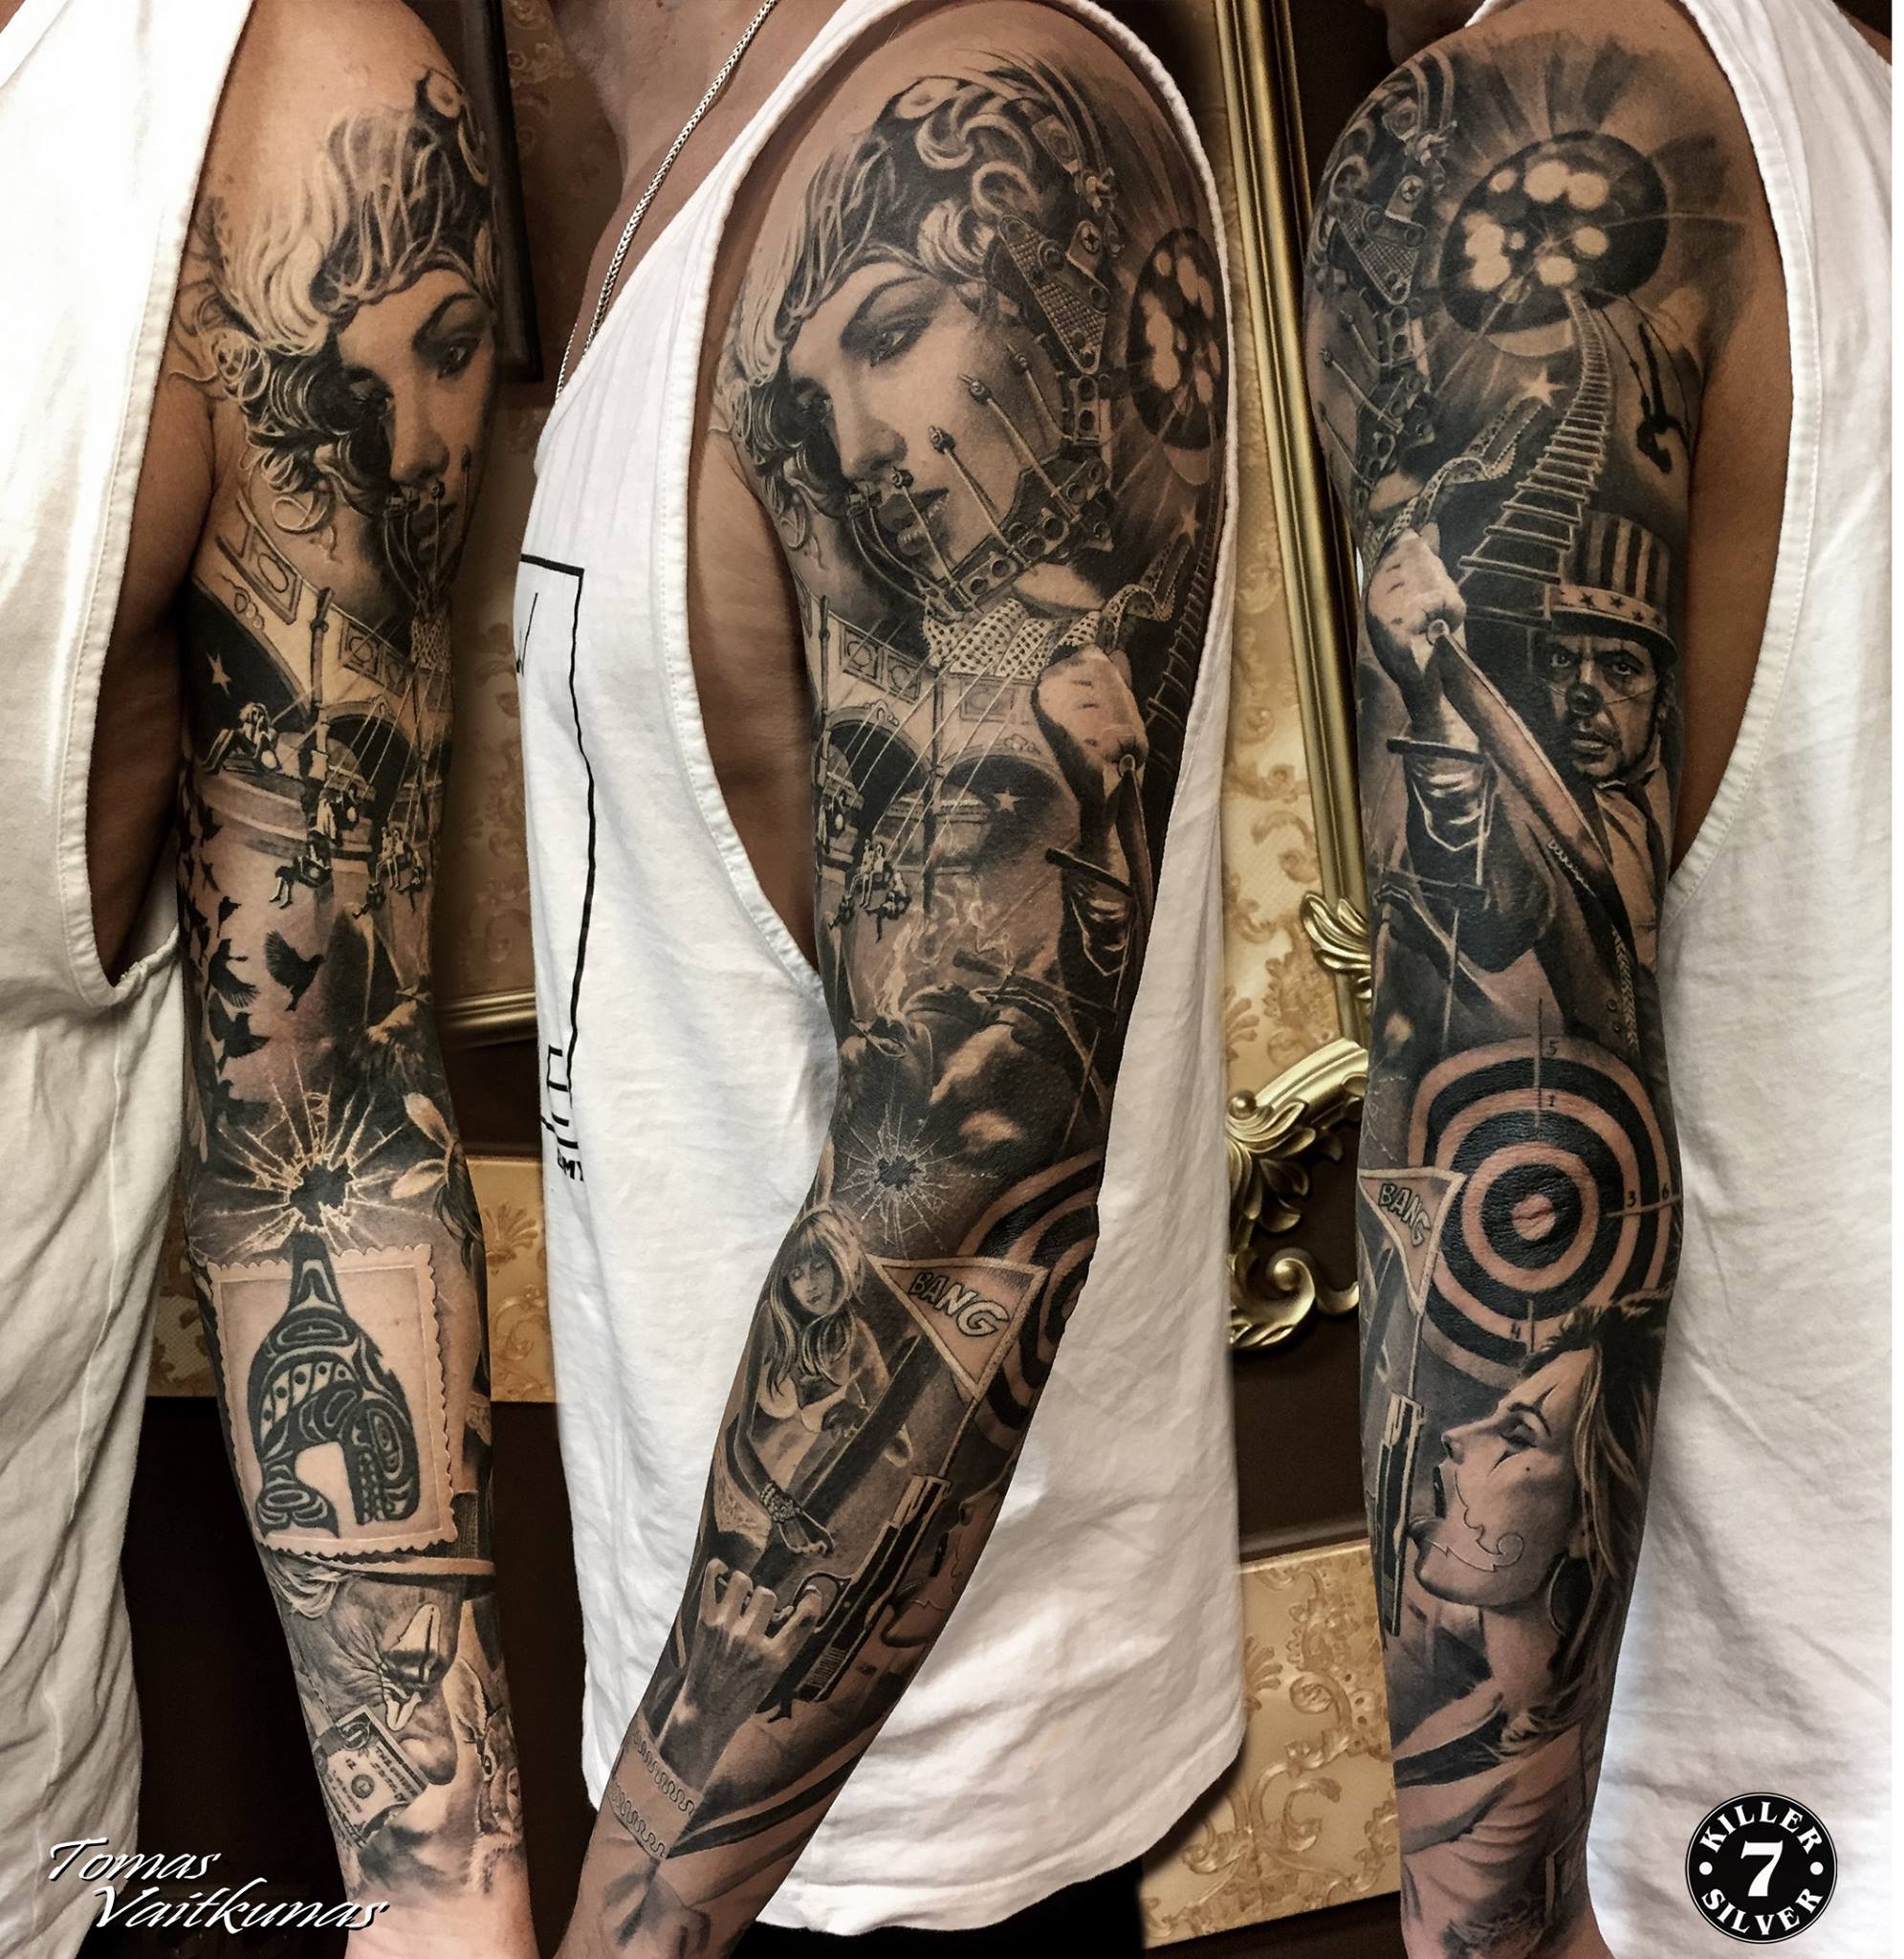 Share 180+ temporary tattoos target latest